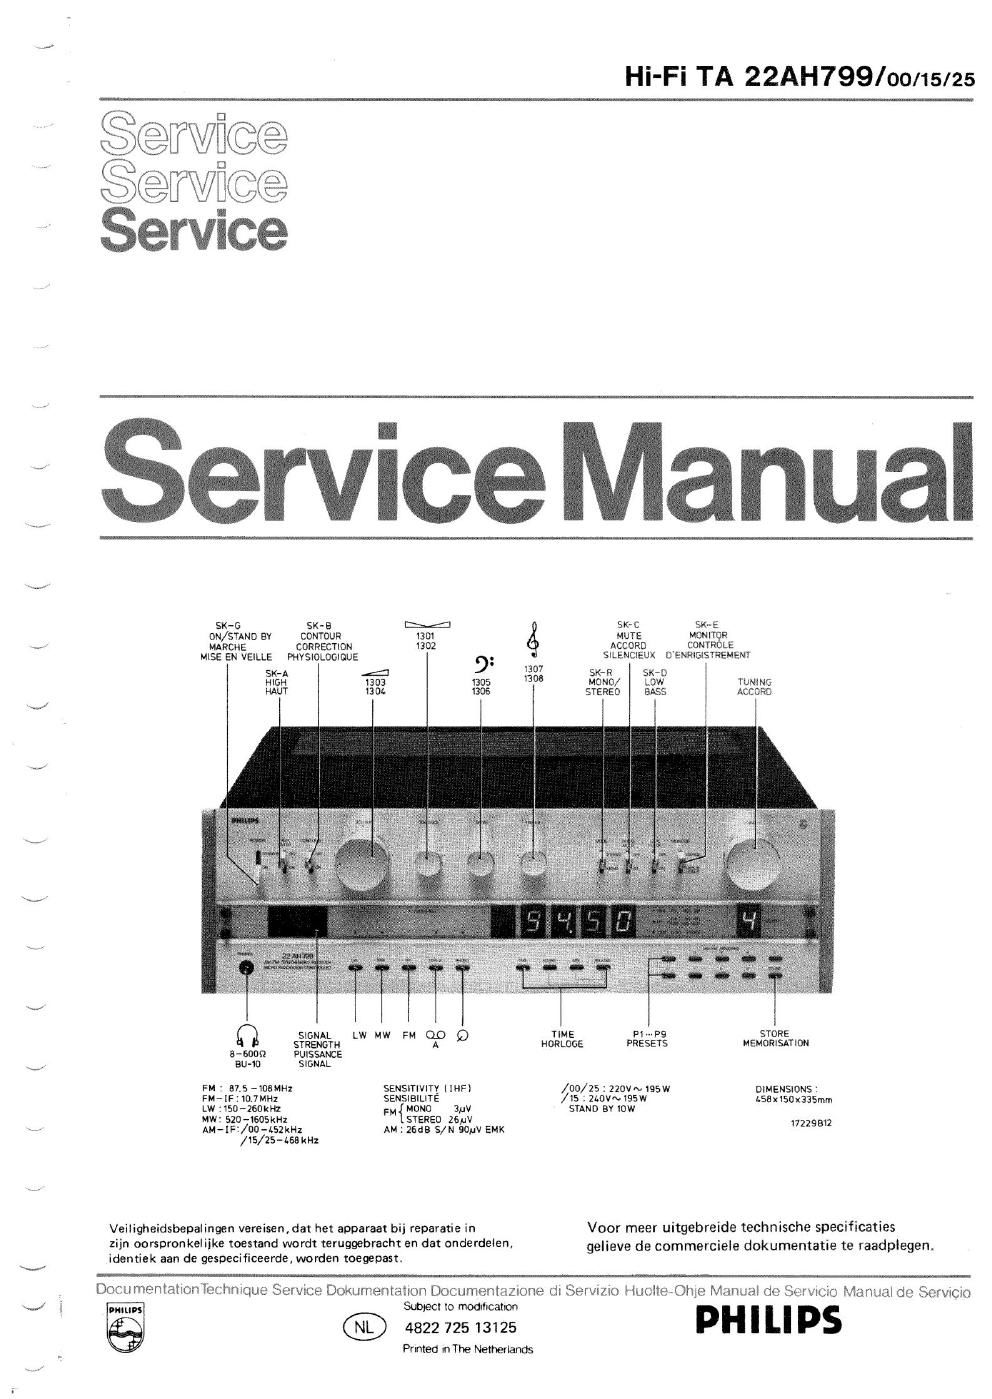 philips 22 ah 799 service manual